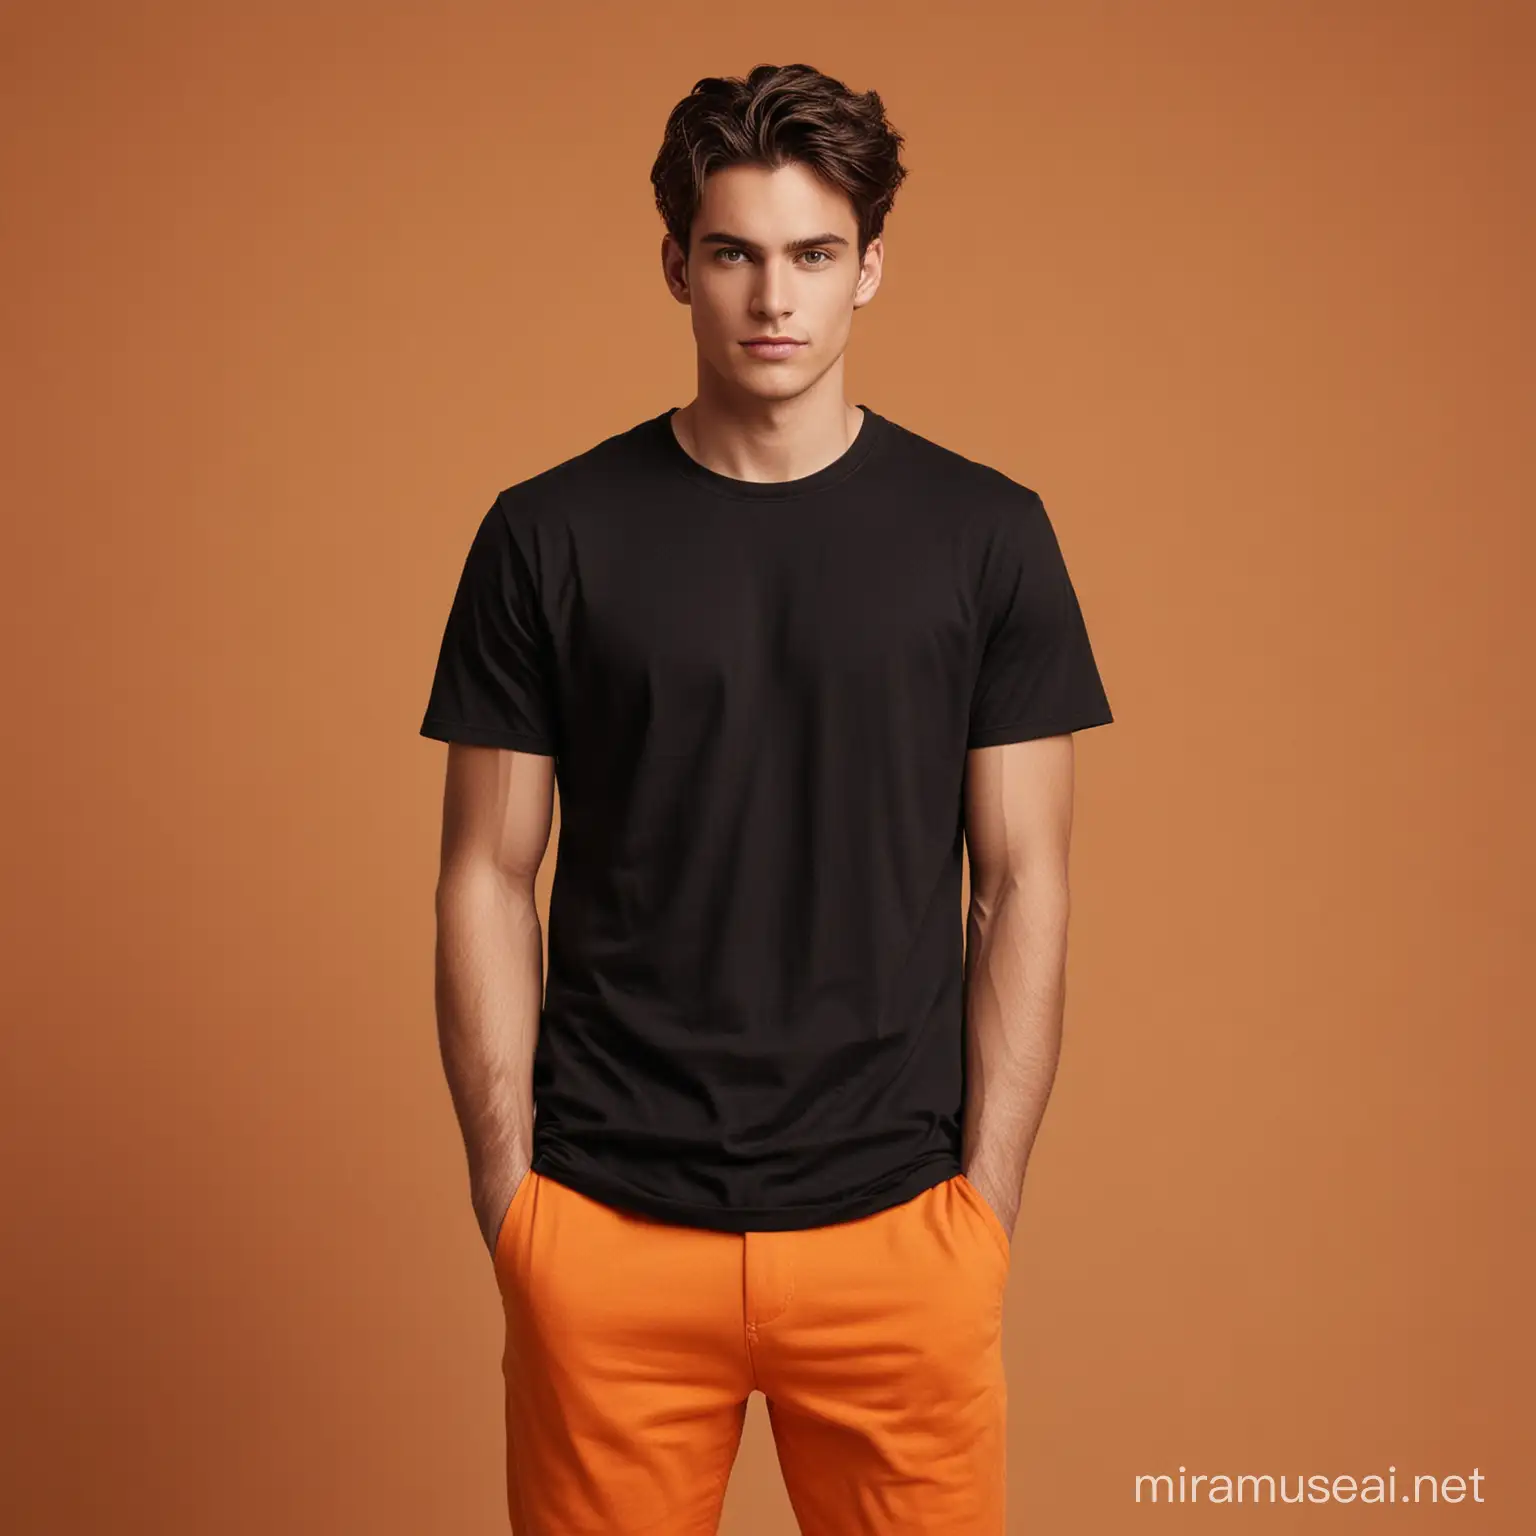 Stylish Male Model in Black TShirt Posing Against Vibrant Orange Background